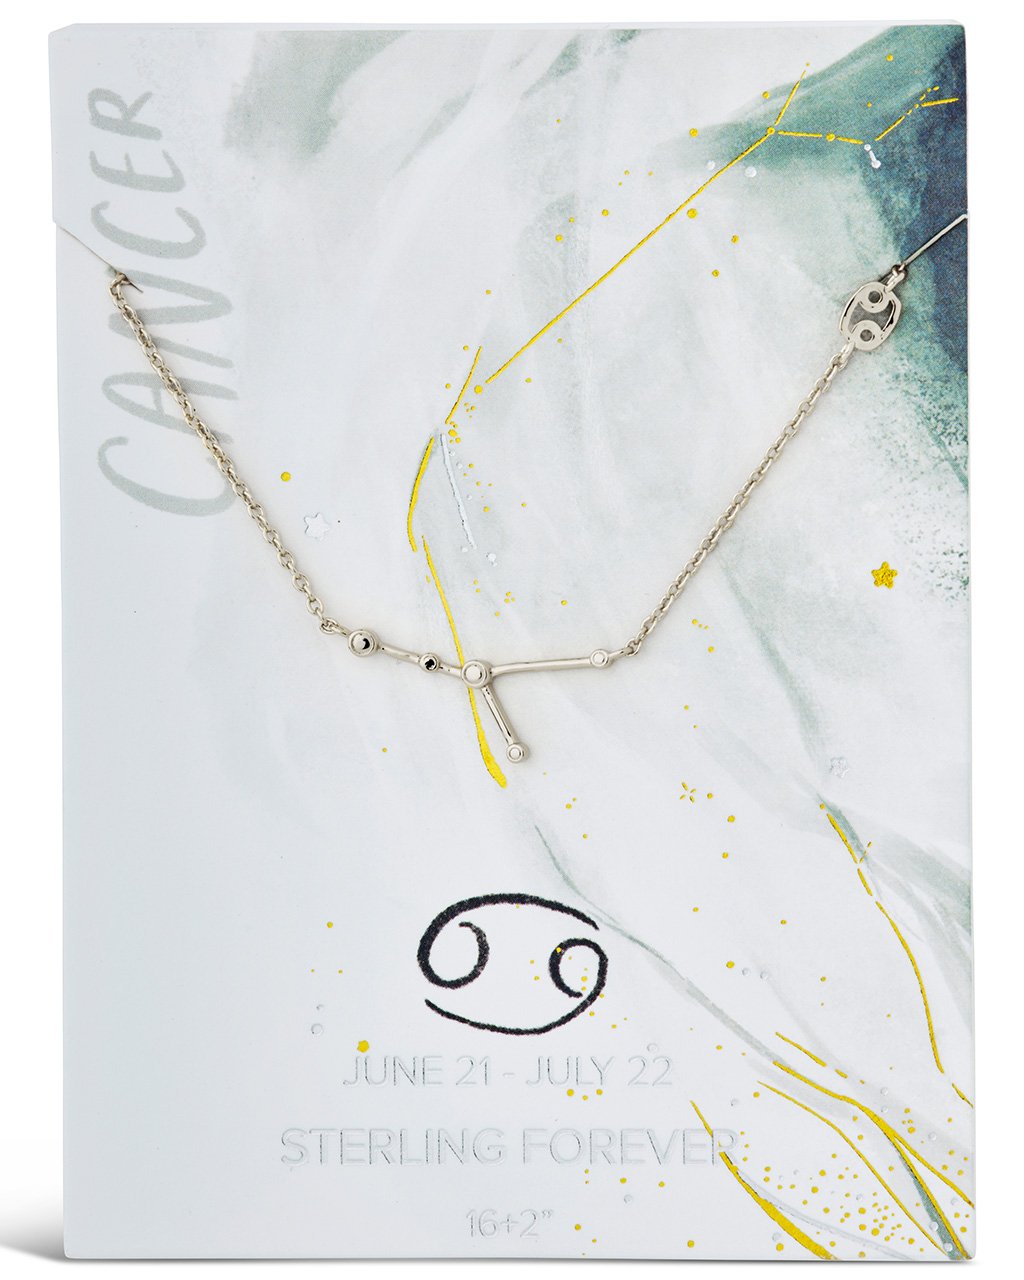 Station Constellation Pendant Necklace Necklace Sterling Forever Silver Cancer (Jun 21 - Jul 22) 